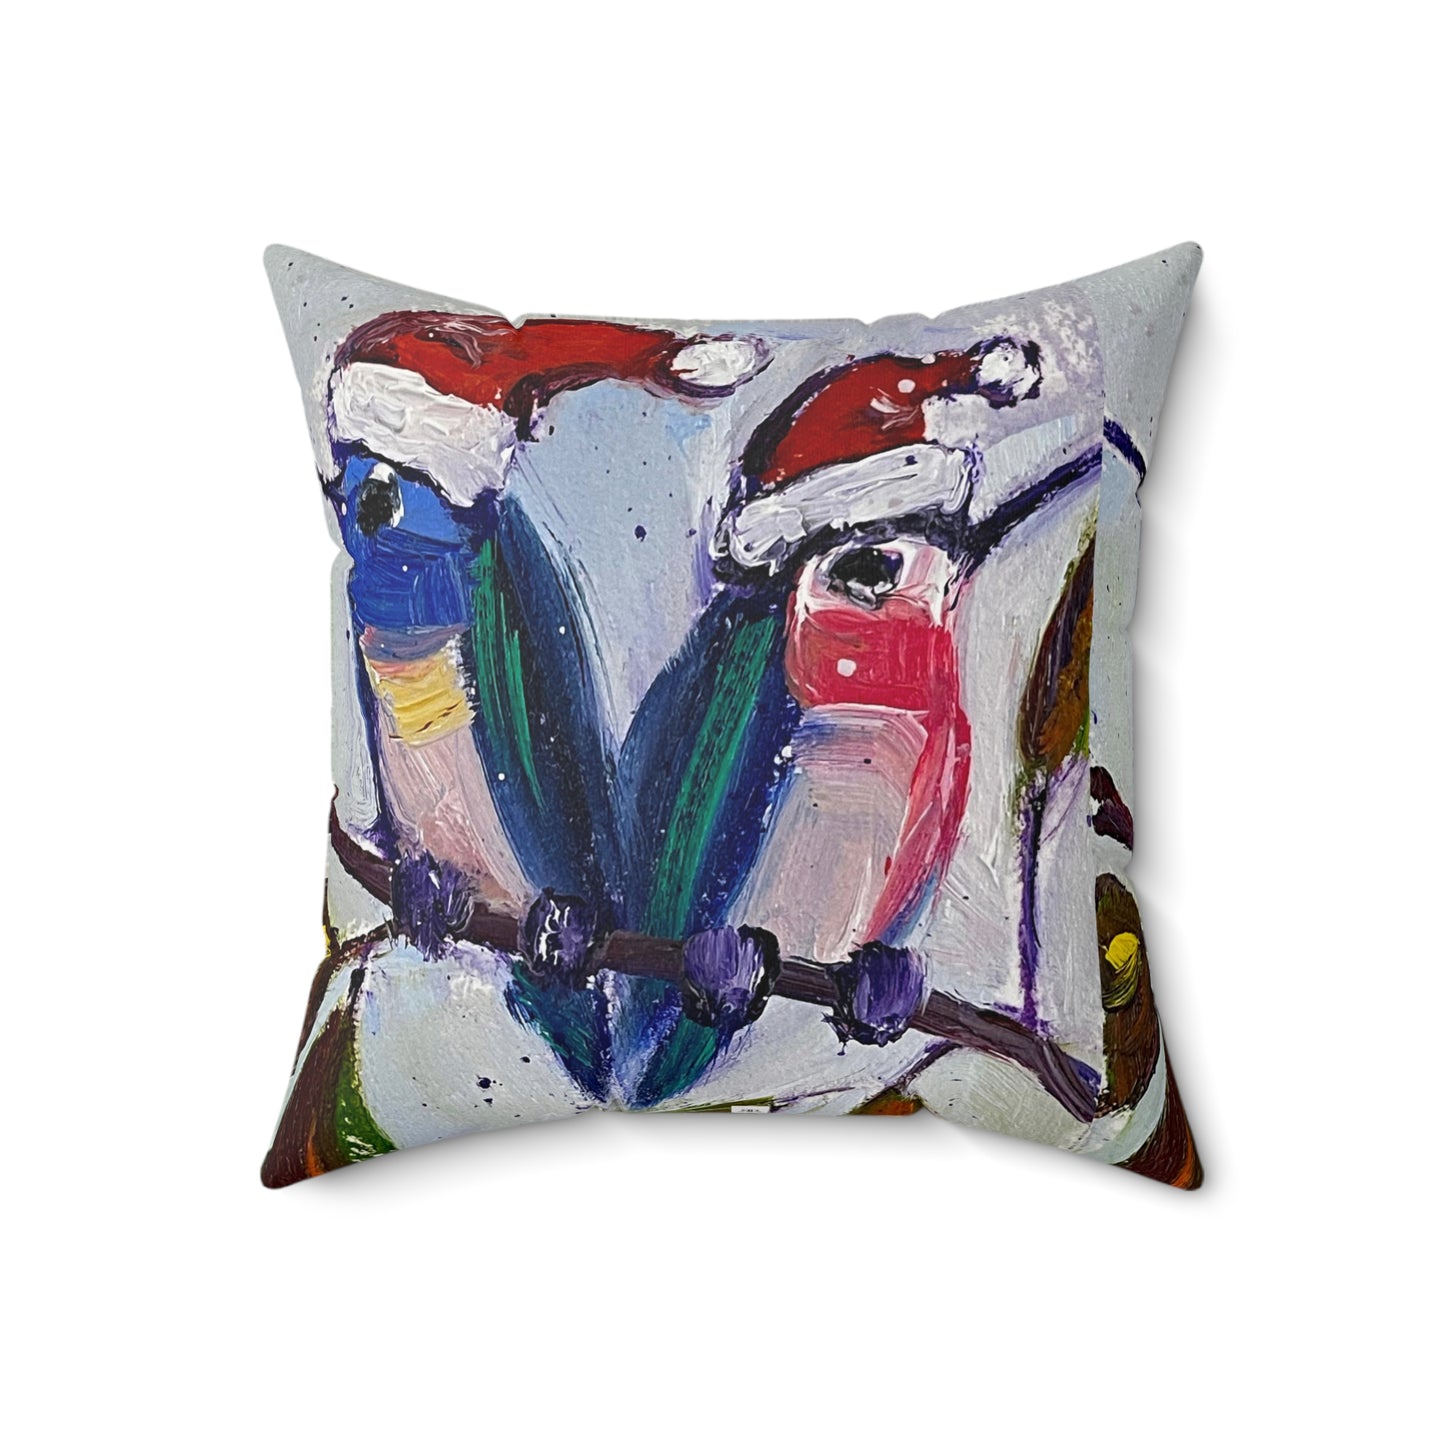 Holiday Hummingbirds Indoor Spun Polyester Square Pillow